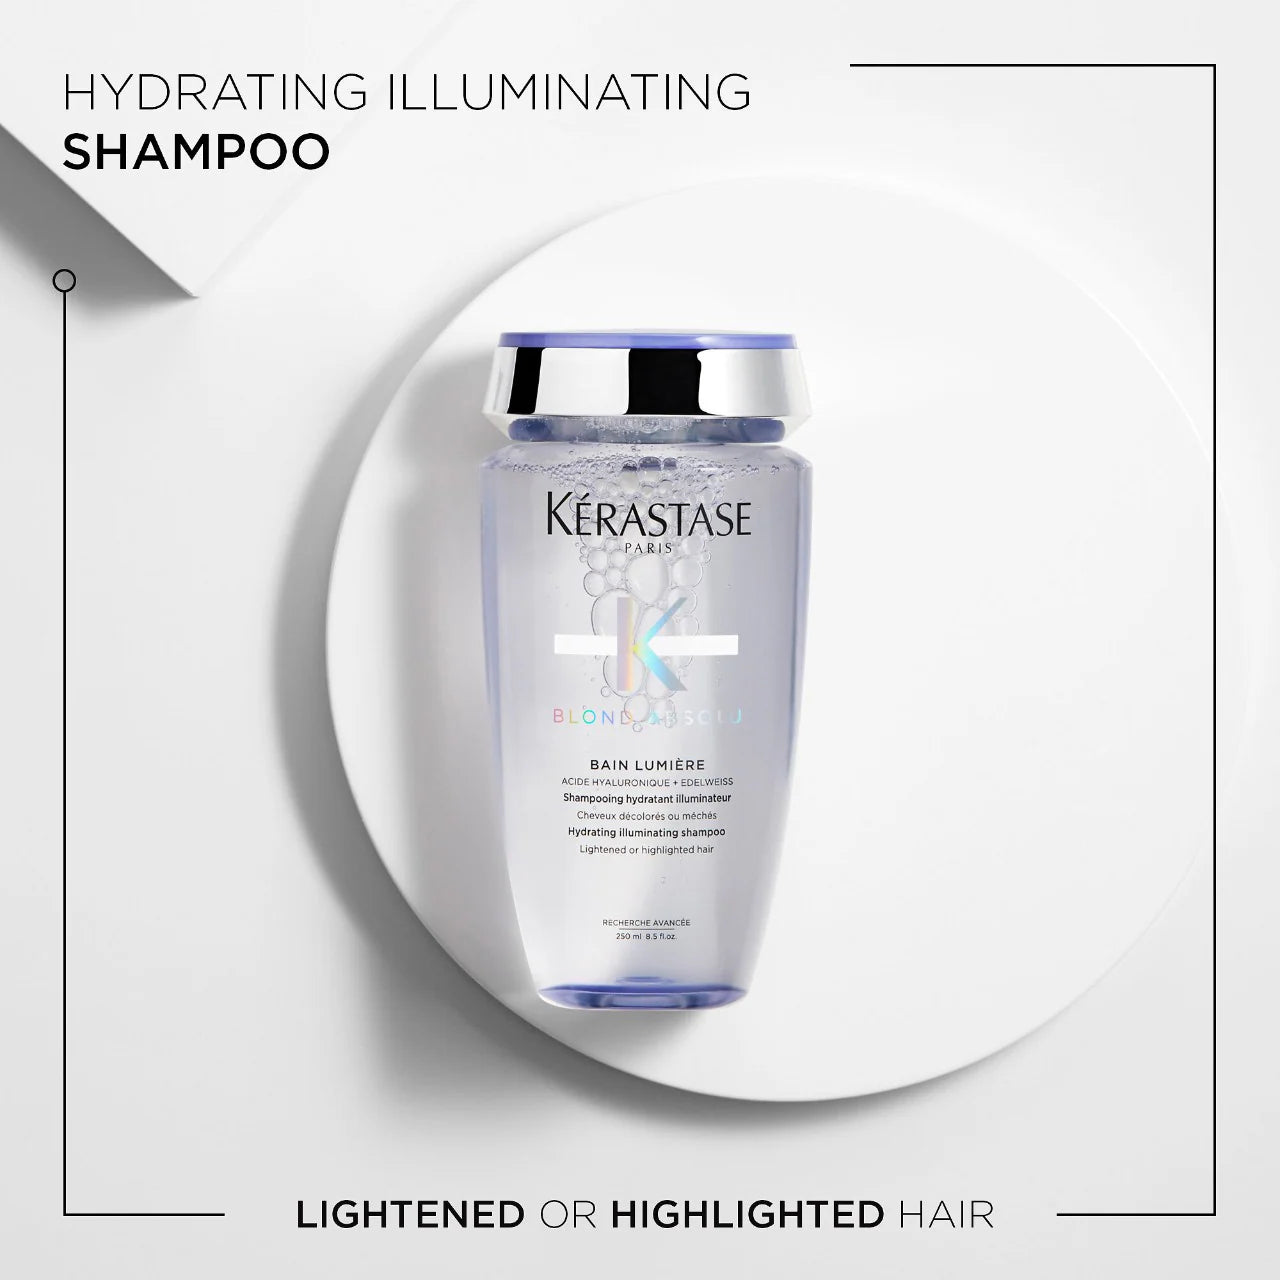 Kerástase Blond Absolu Hydrating Illuminating Shampoo 250 ml